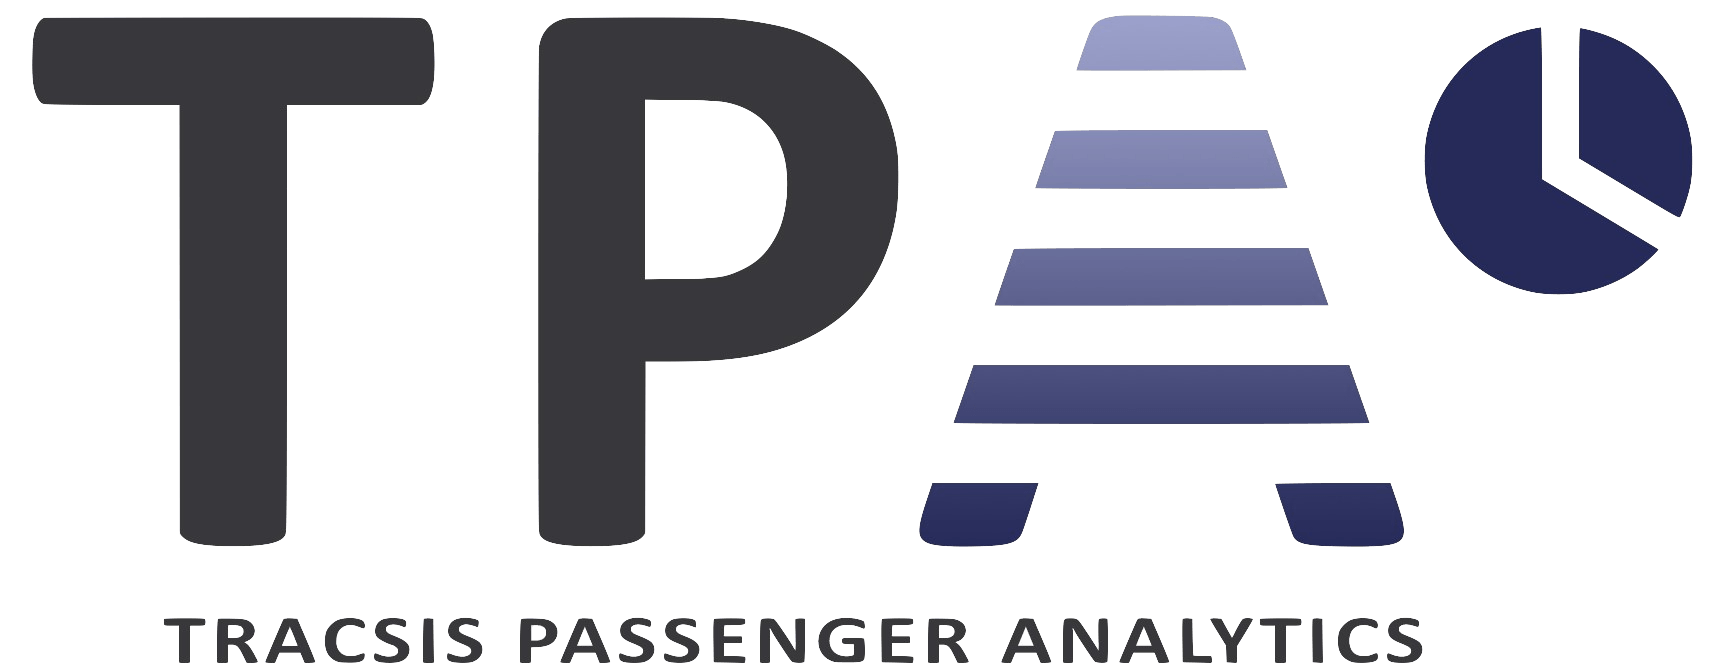 TPA Logo - TPA logo FINAL 2 Traffic and Data Services